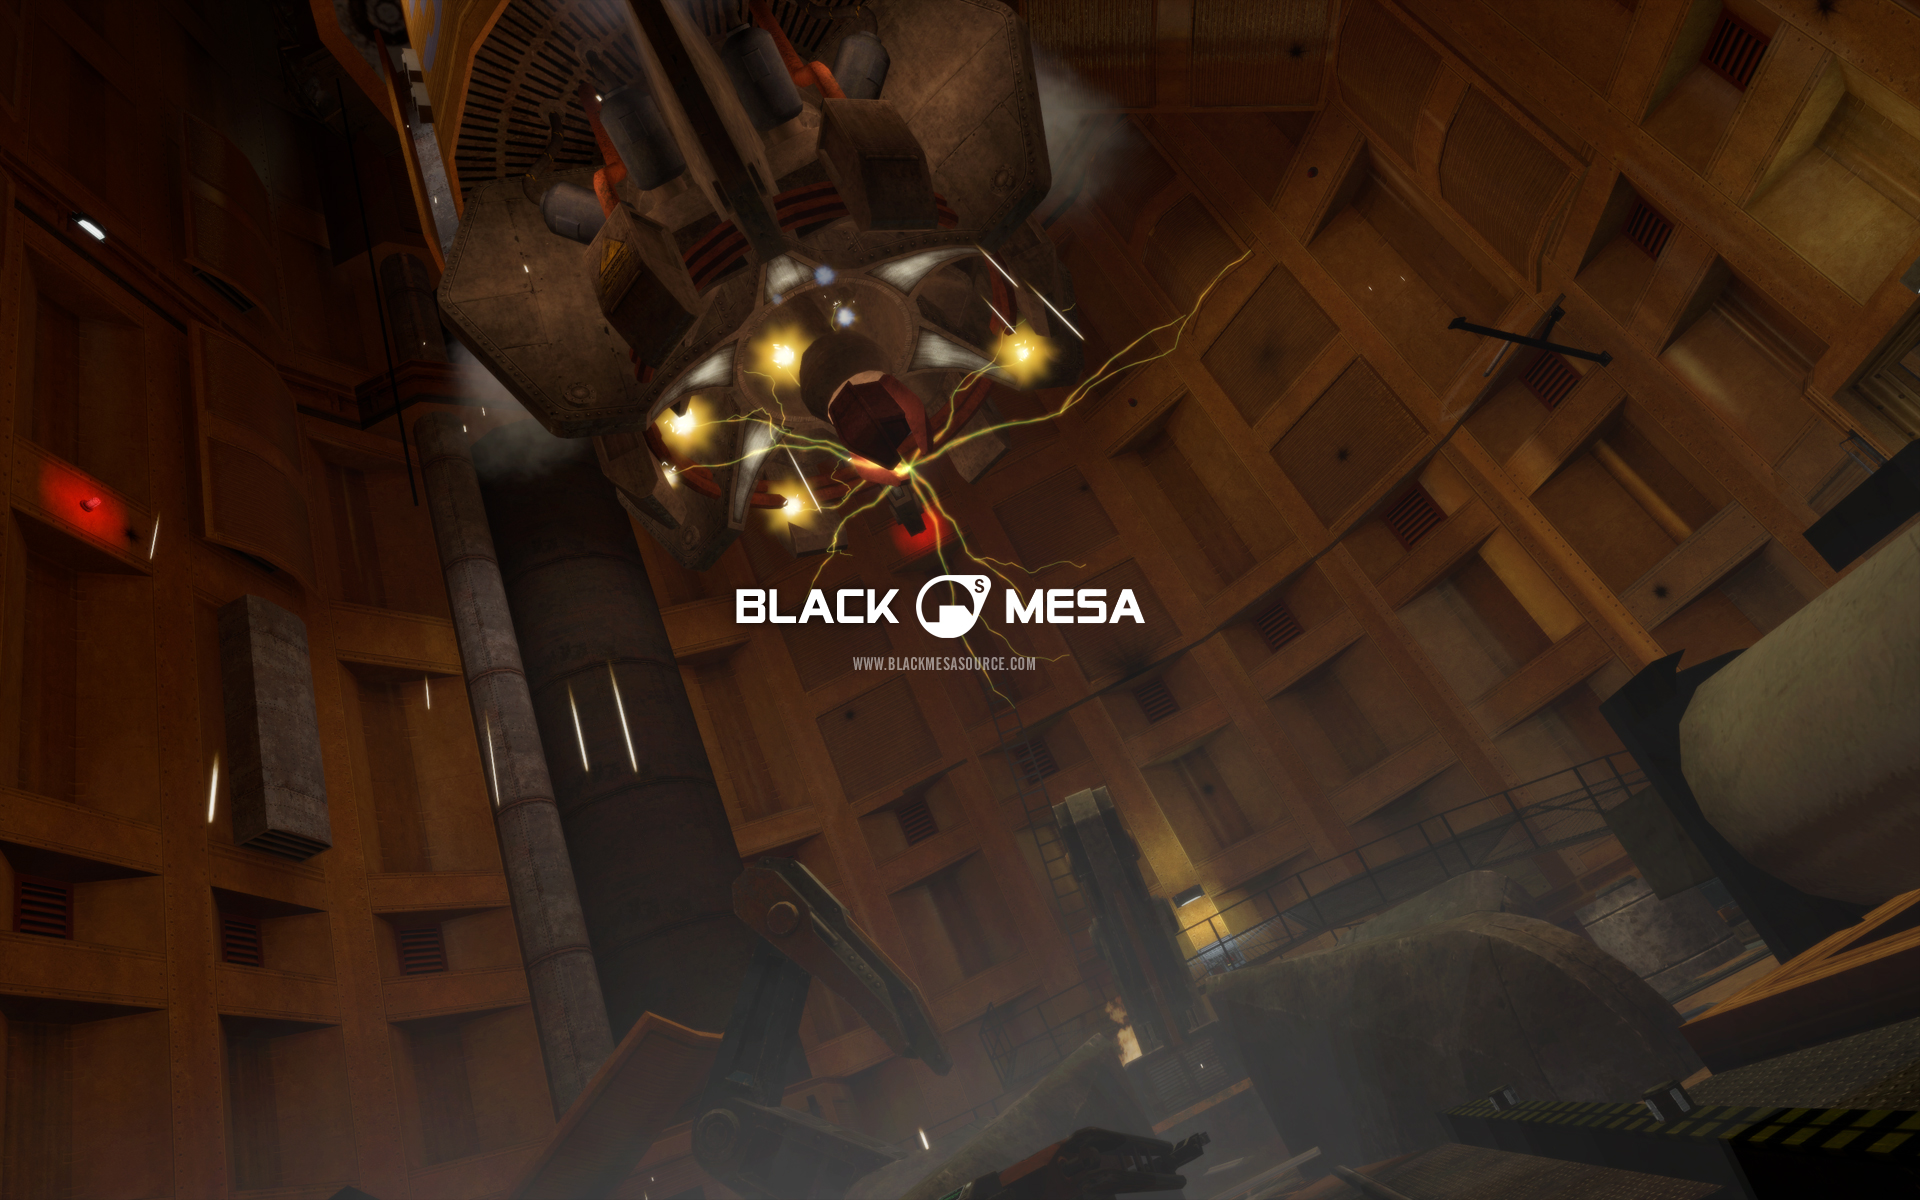 Black Mesa HD desktop wallpaper featuring Half-Life 2, resonance cascade, and science.